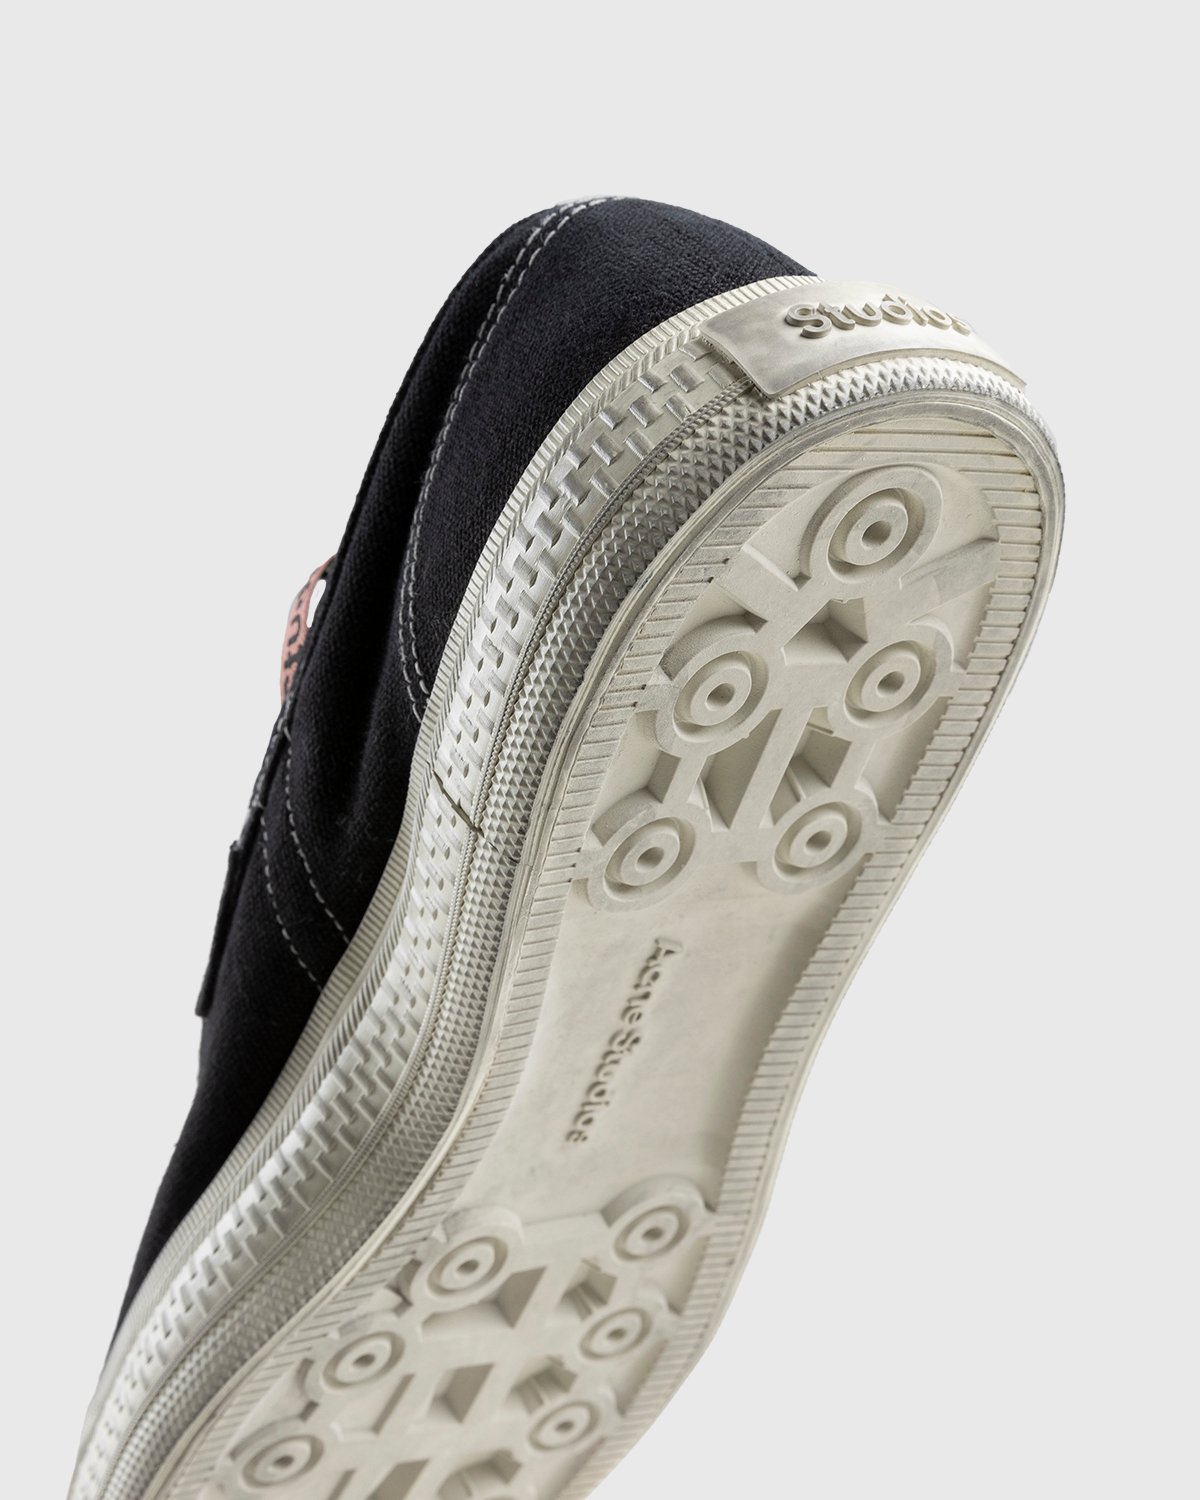 Acne Studios - Ballow Tumbled Slip On Black White - Footwear - Black - Image 5